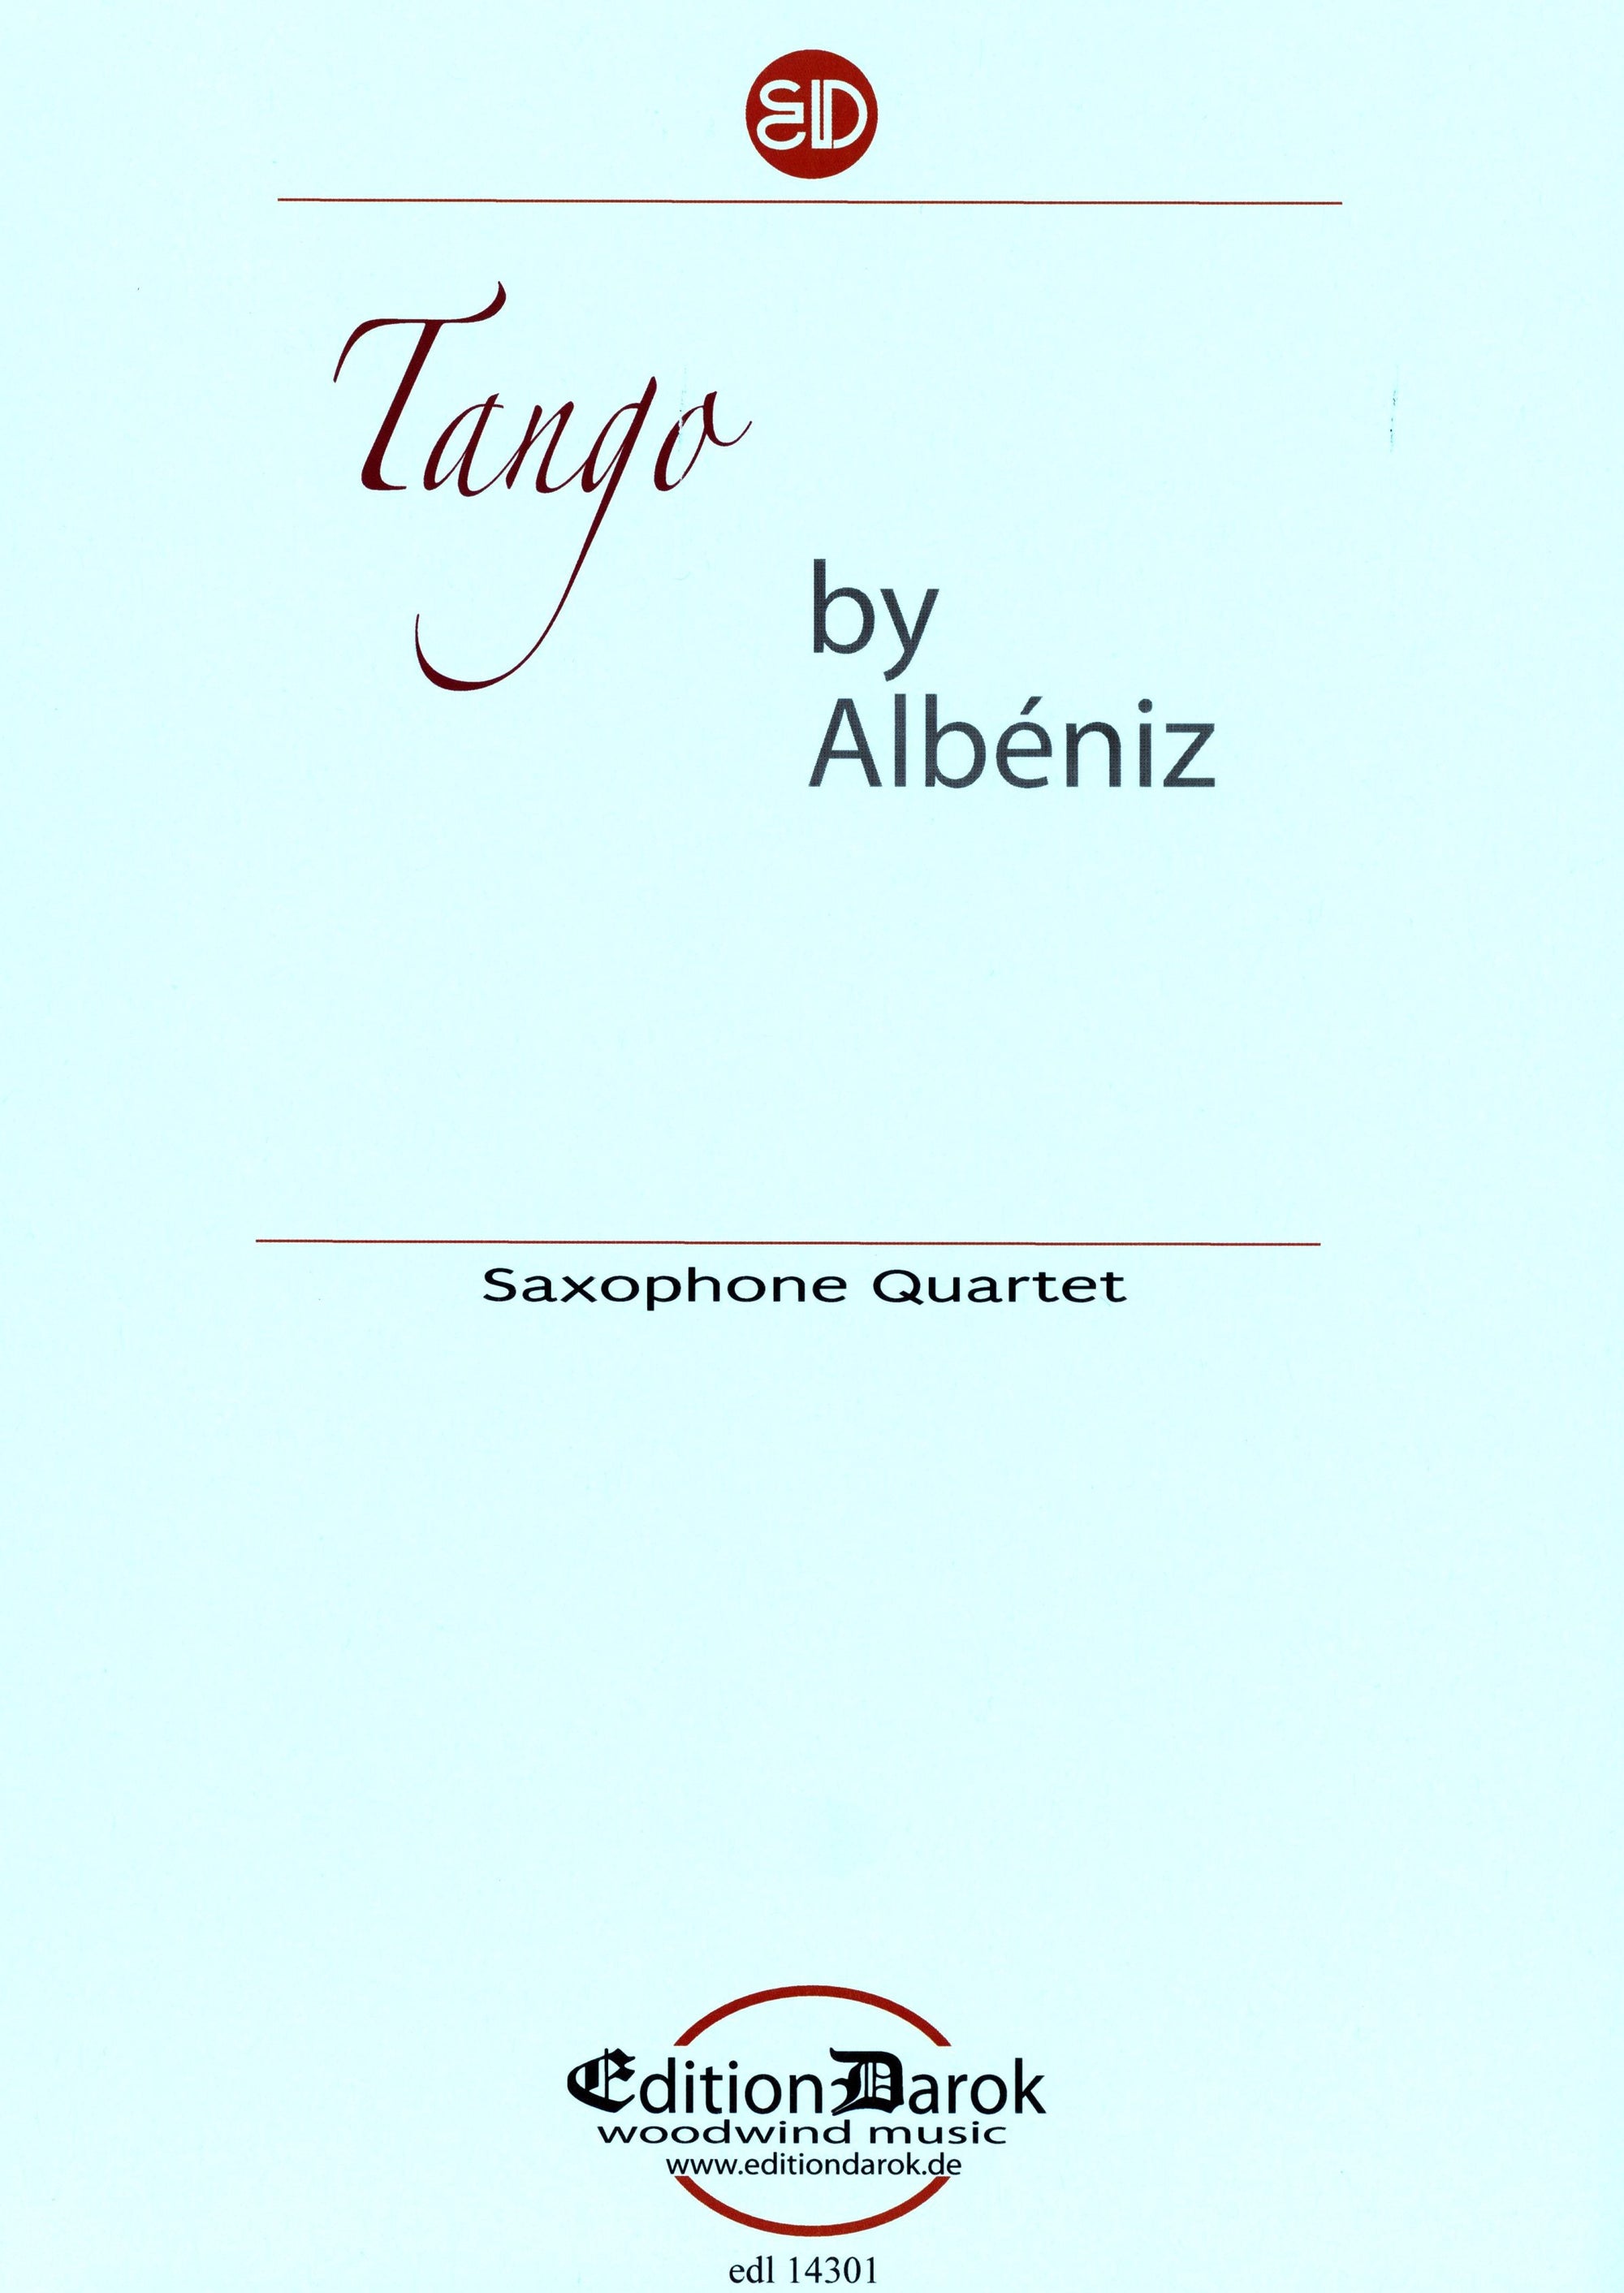 Albéniz: Tango (arr. for saxophone quartet)